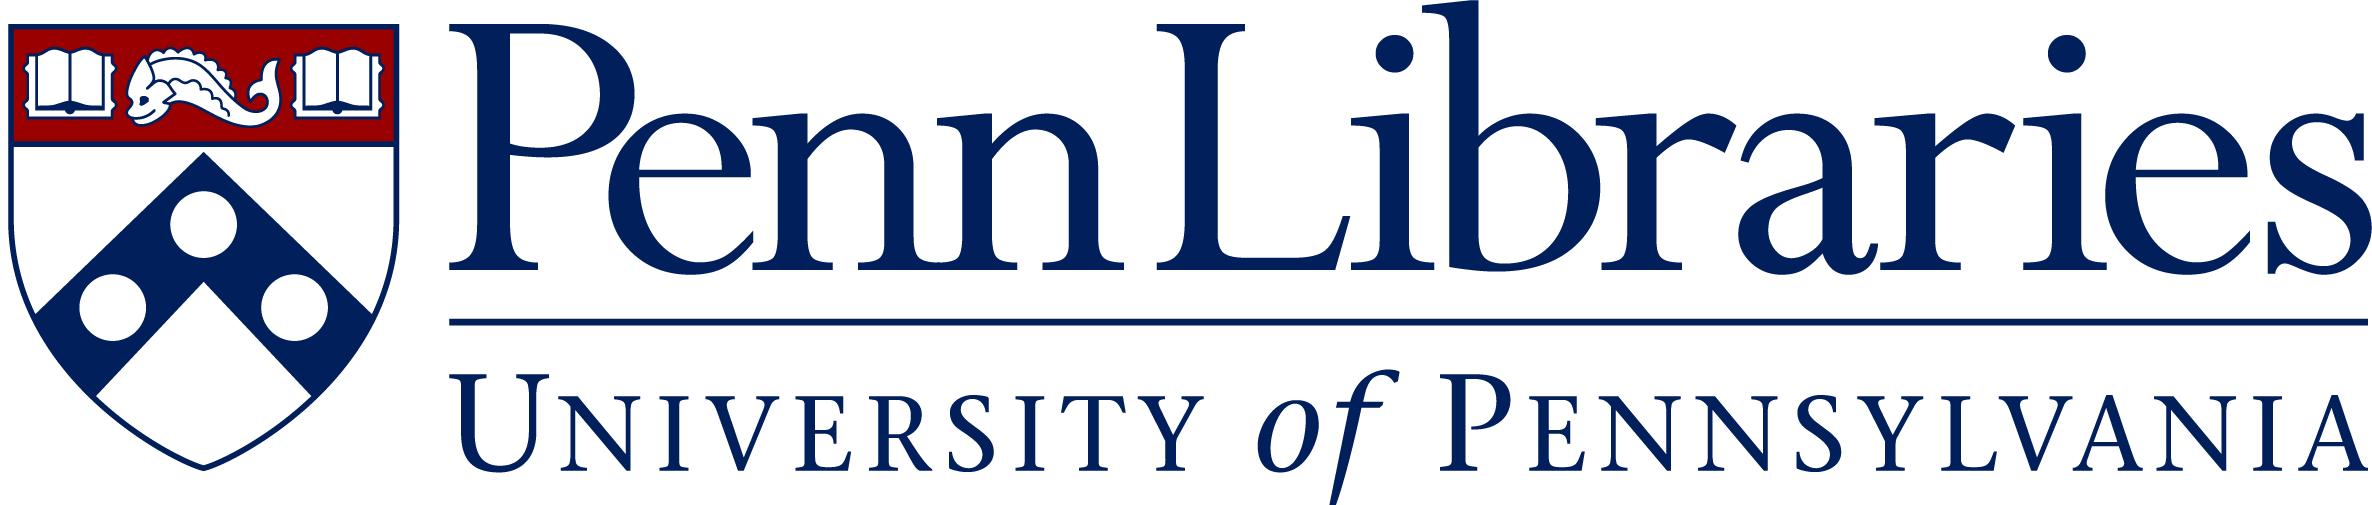 Penn Libraries logo